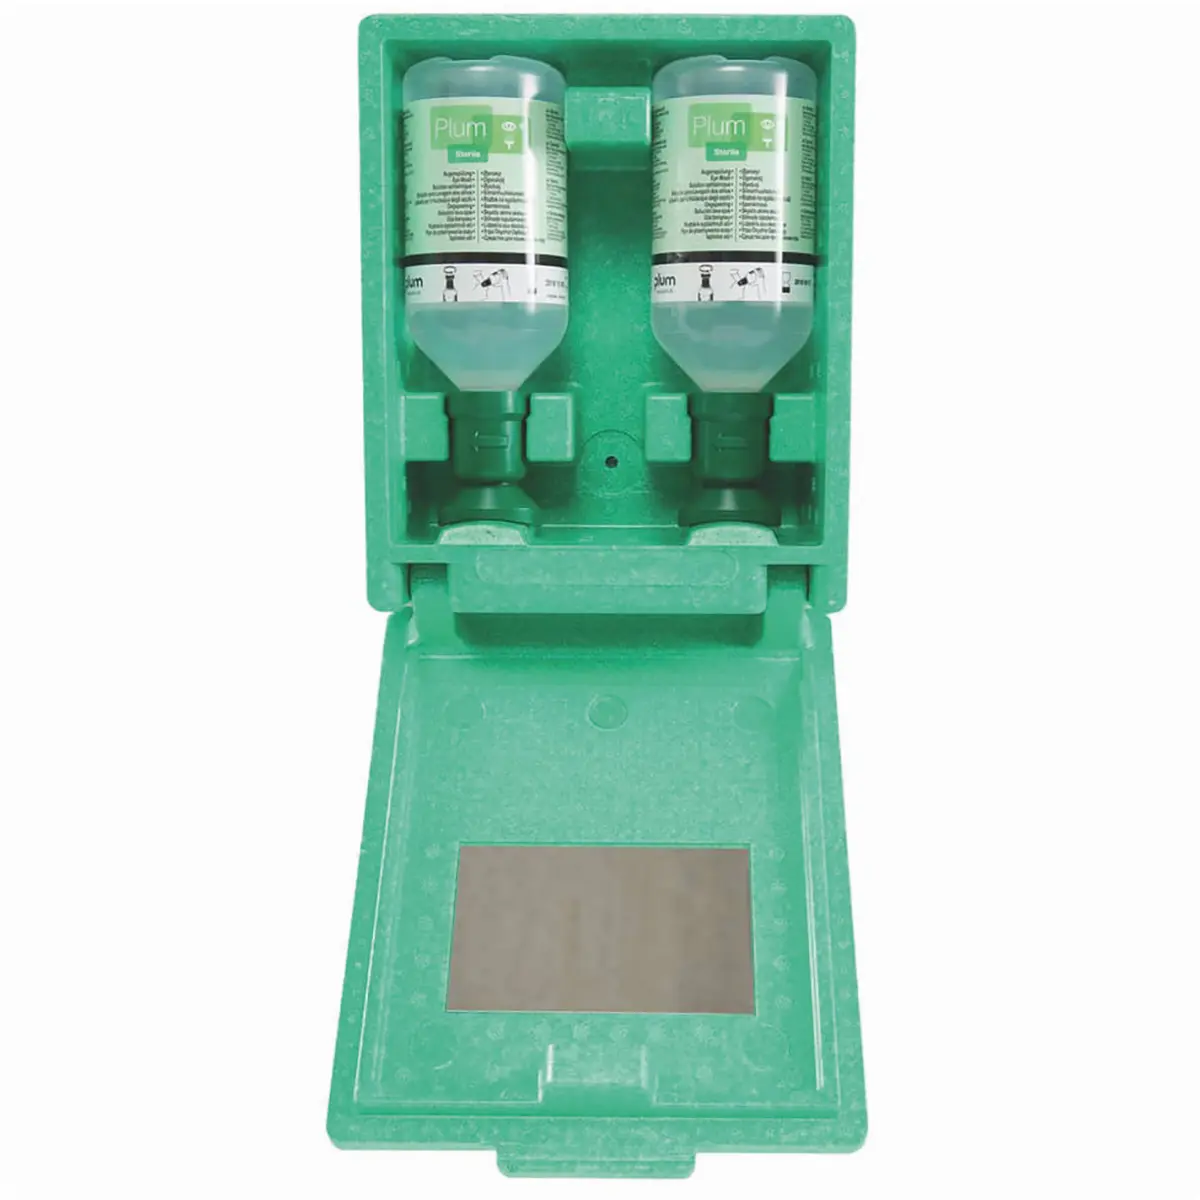 Augenspülstation Plum 2x500ml grün in Wandbox LEINA-WERKE 44023